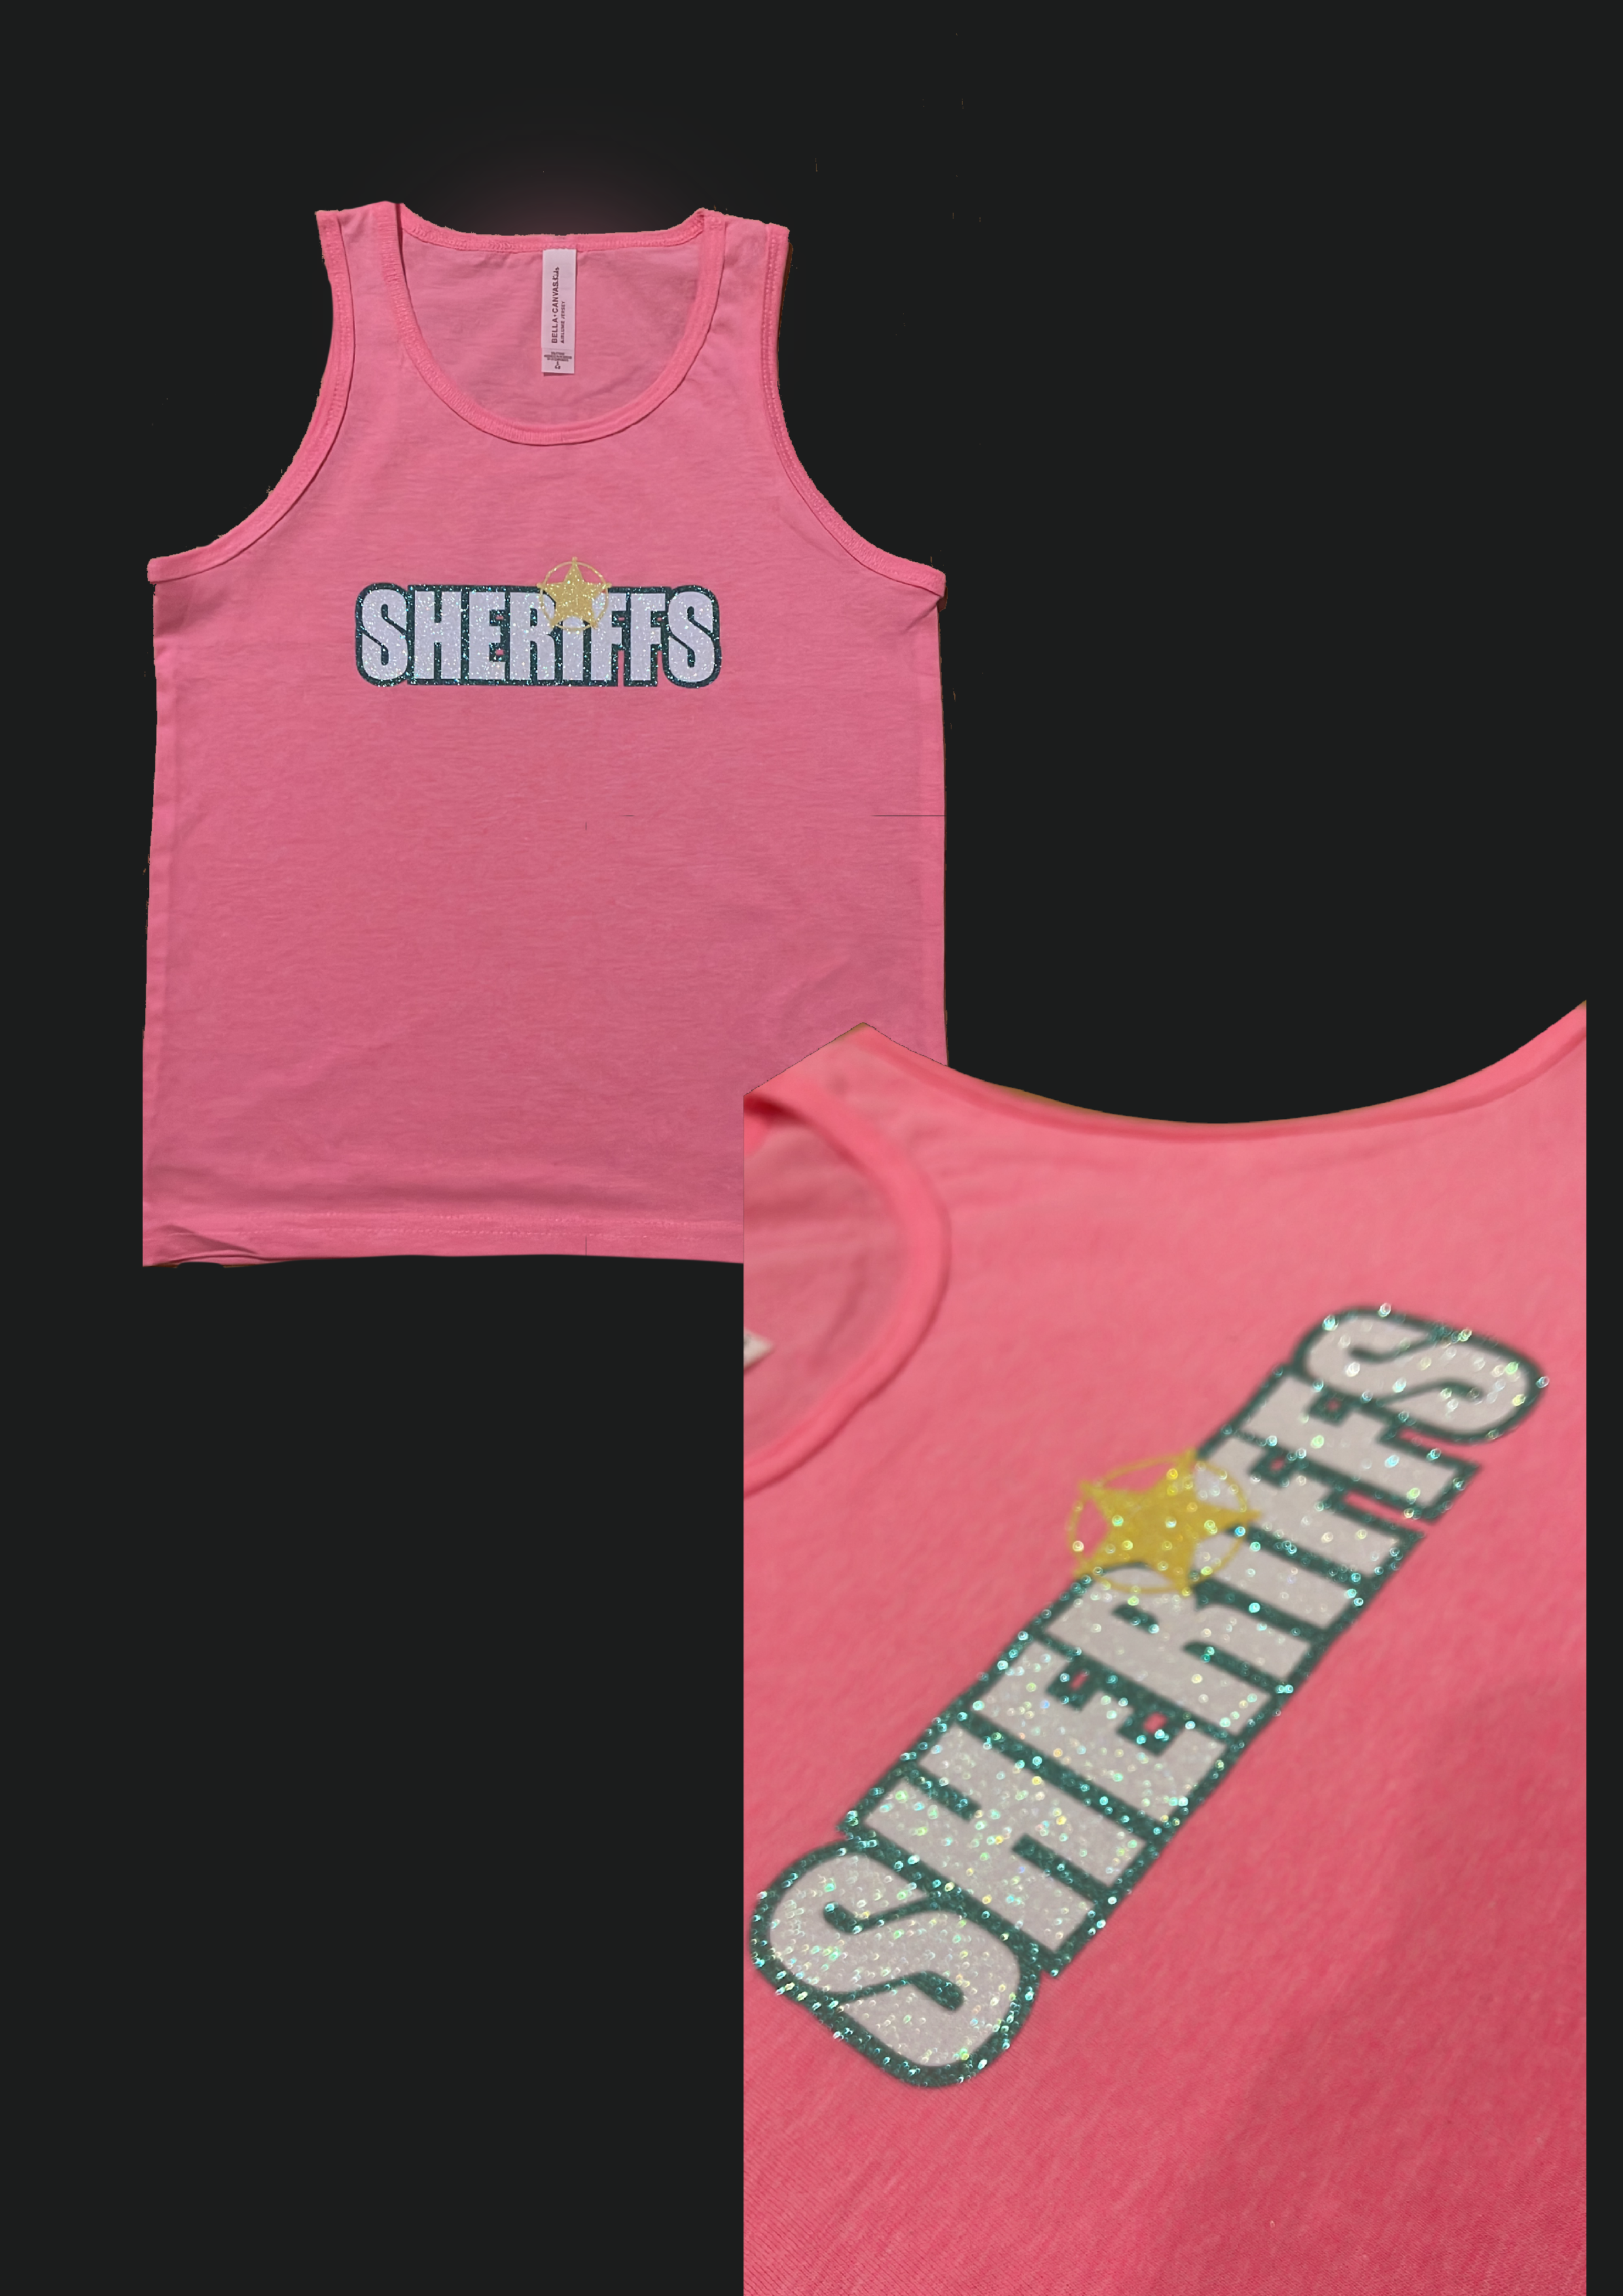 SHERIFFS TEAM TANK